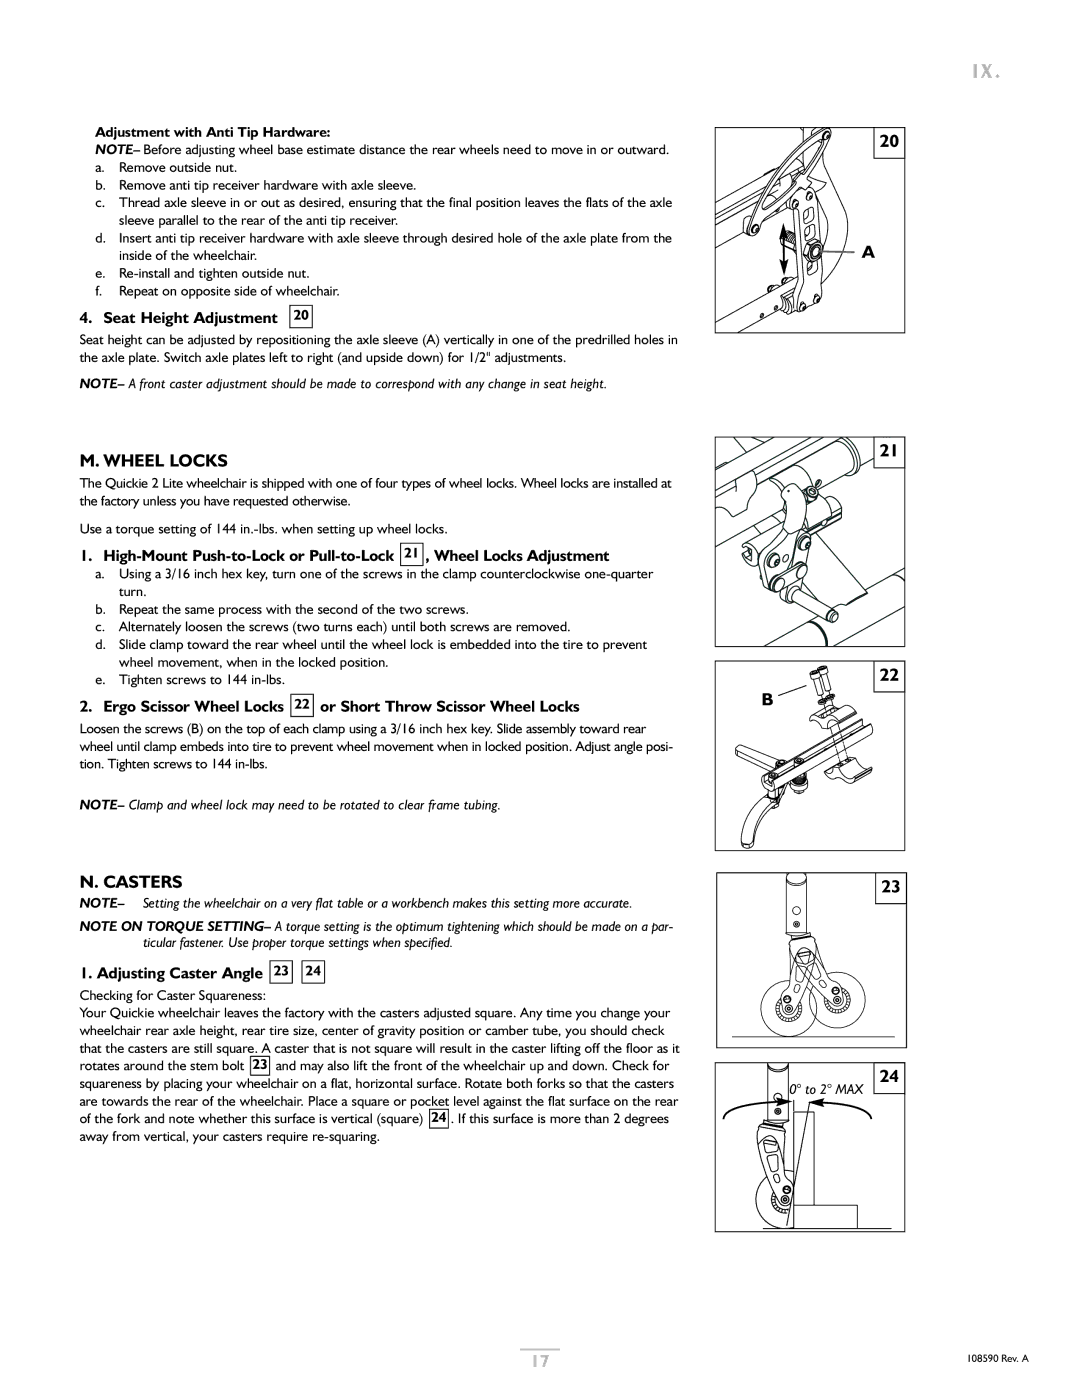 Sunrise Medical Quickie 2 Lite owner manual Wheel Locks, Casters, Seat Height Adjustment, Adjusting Caster Angle 23 